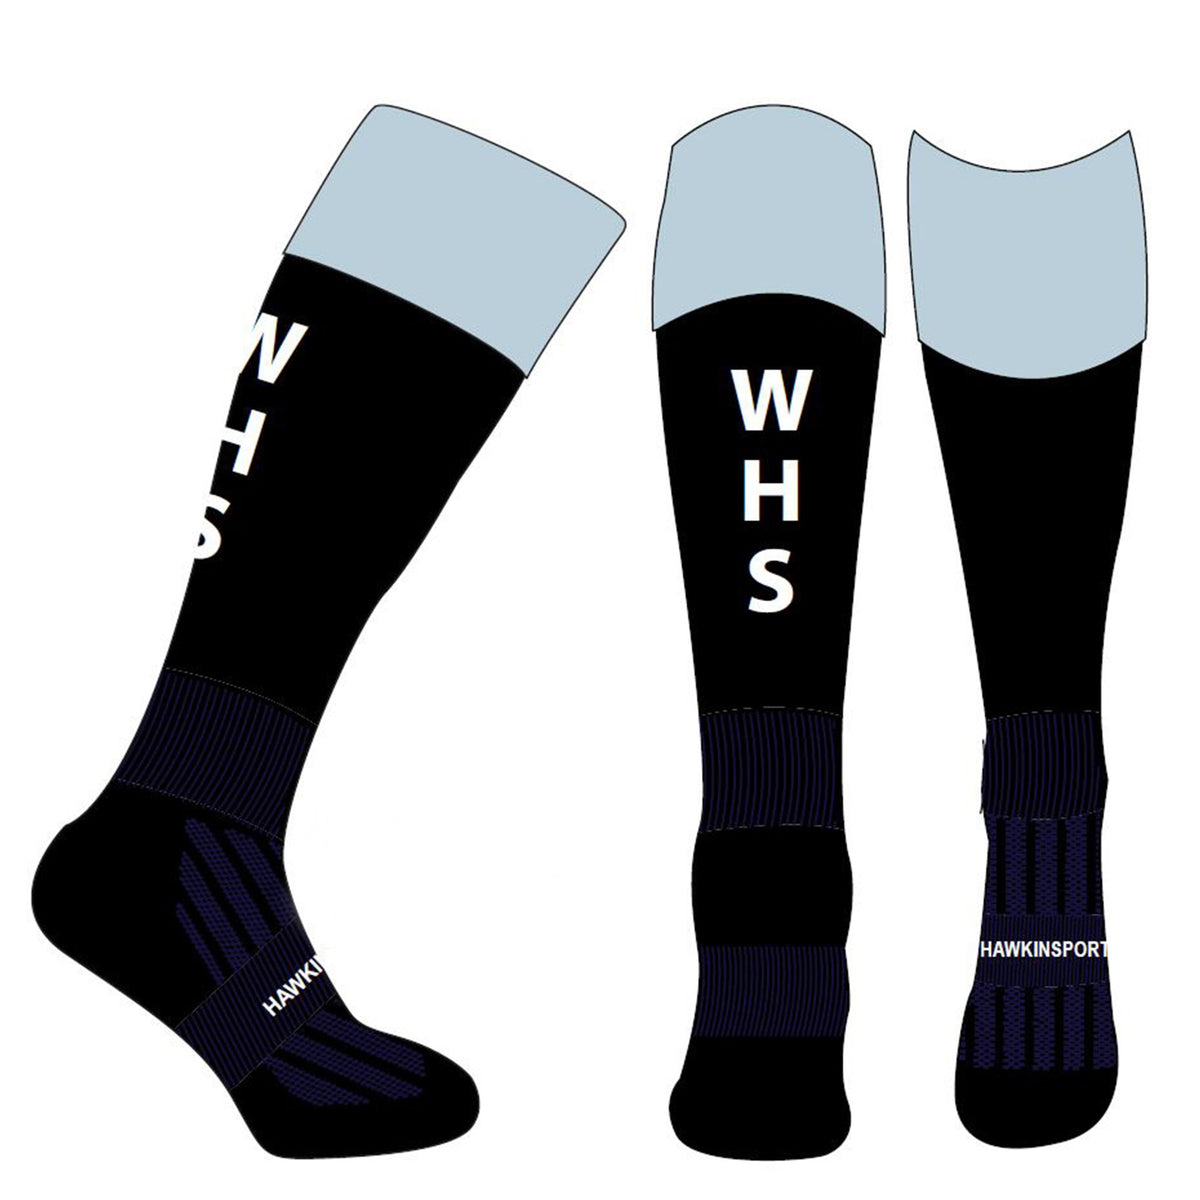 Wycombe High School Games Socks